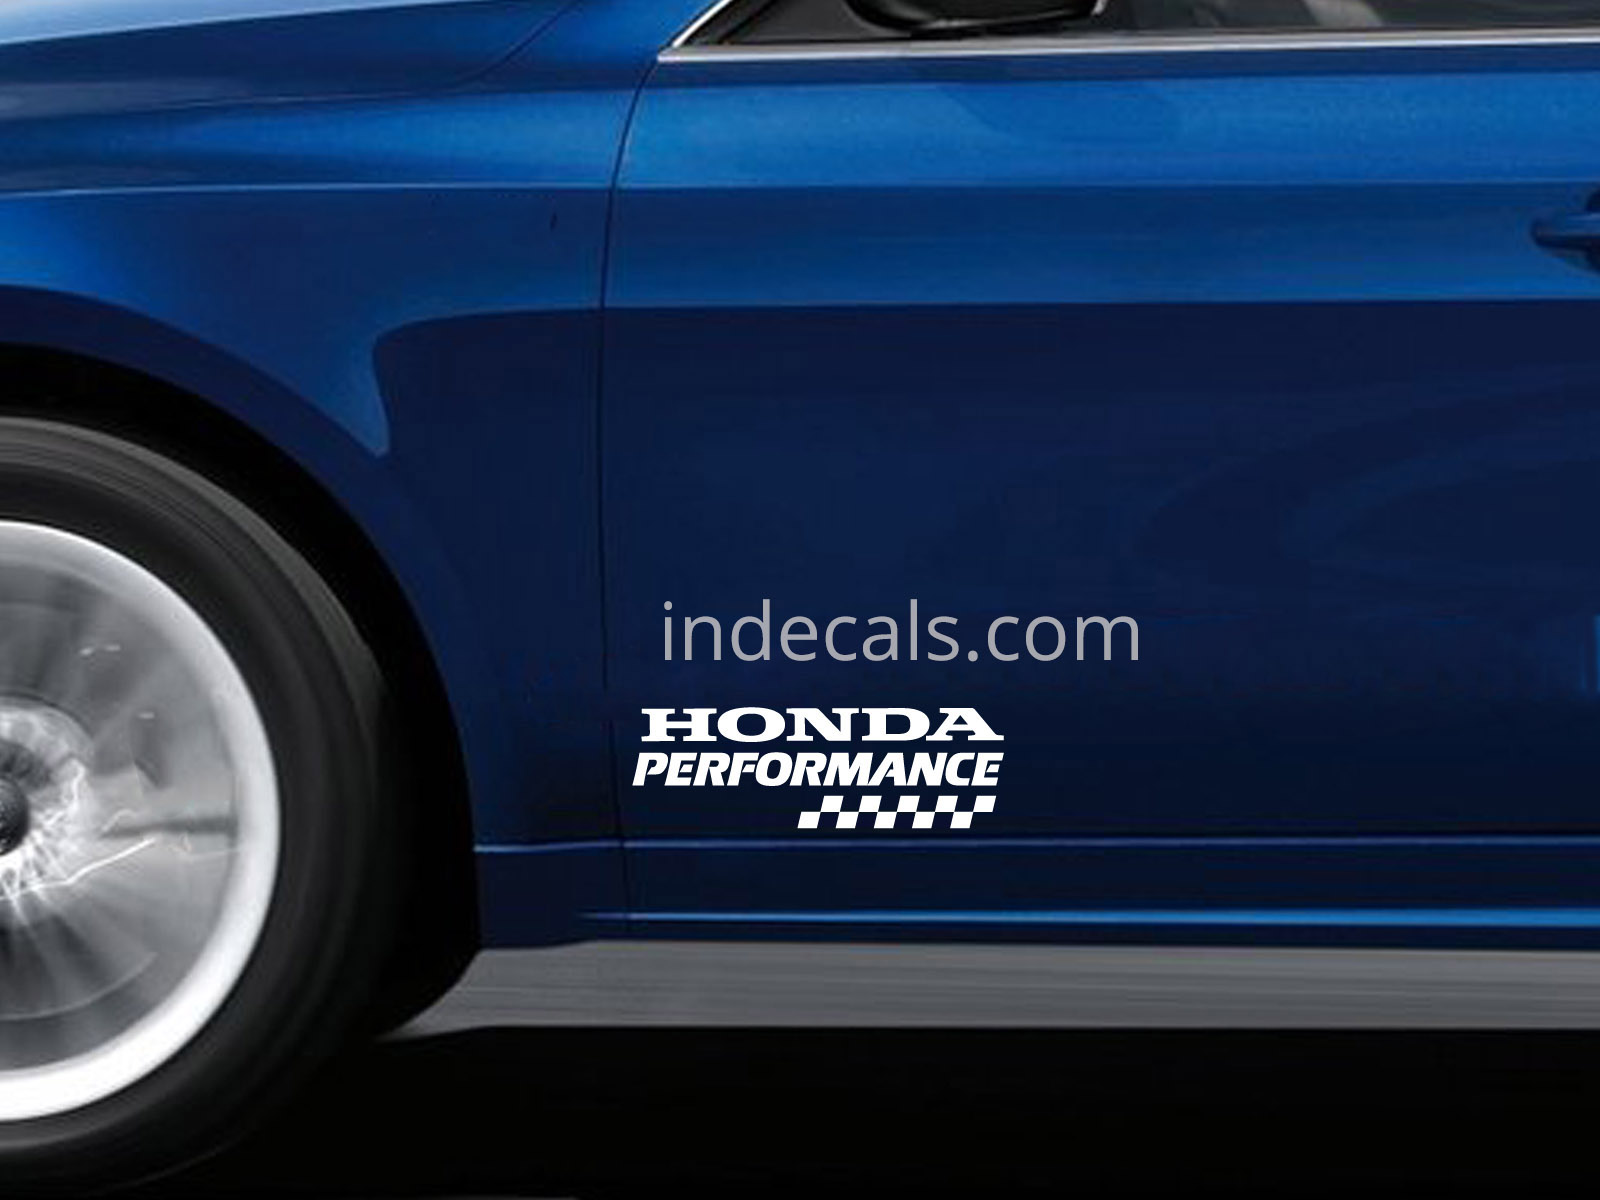 2 x Honda Performance Stickers for Doors - White